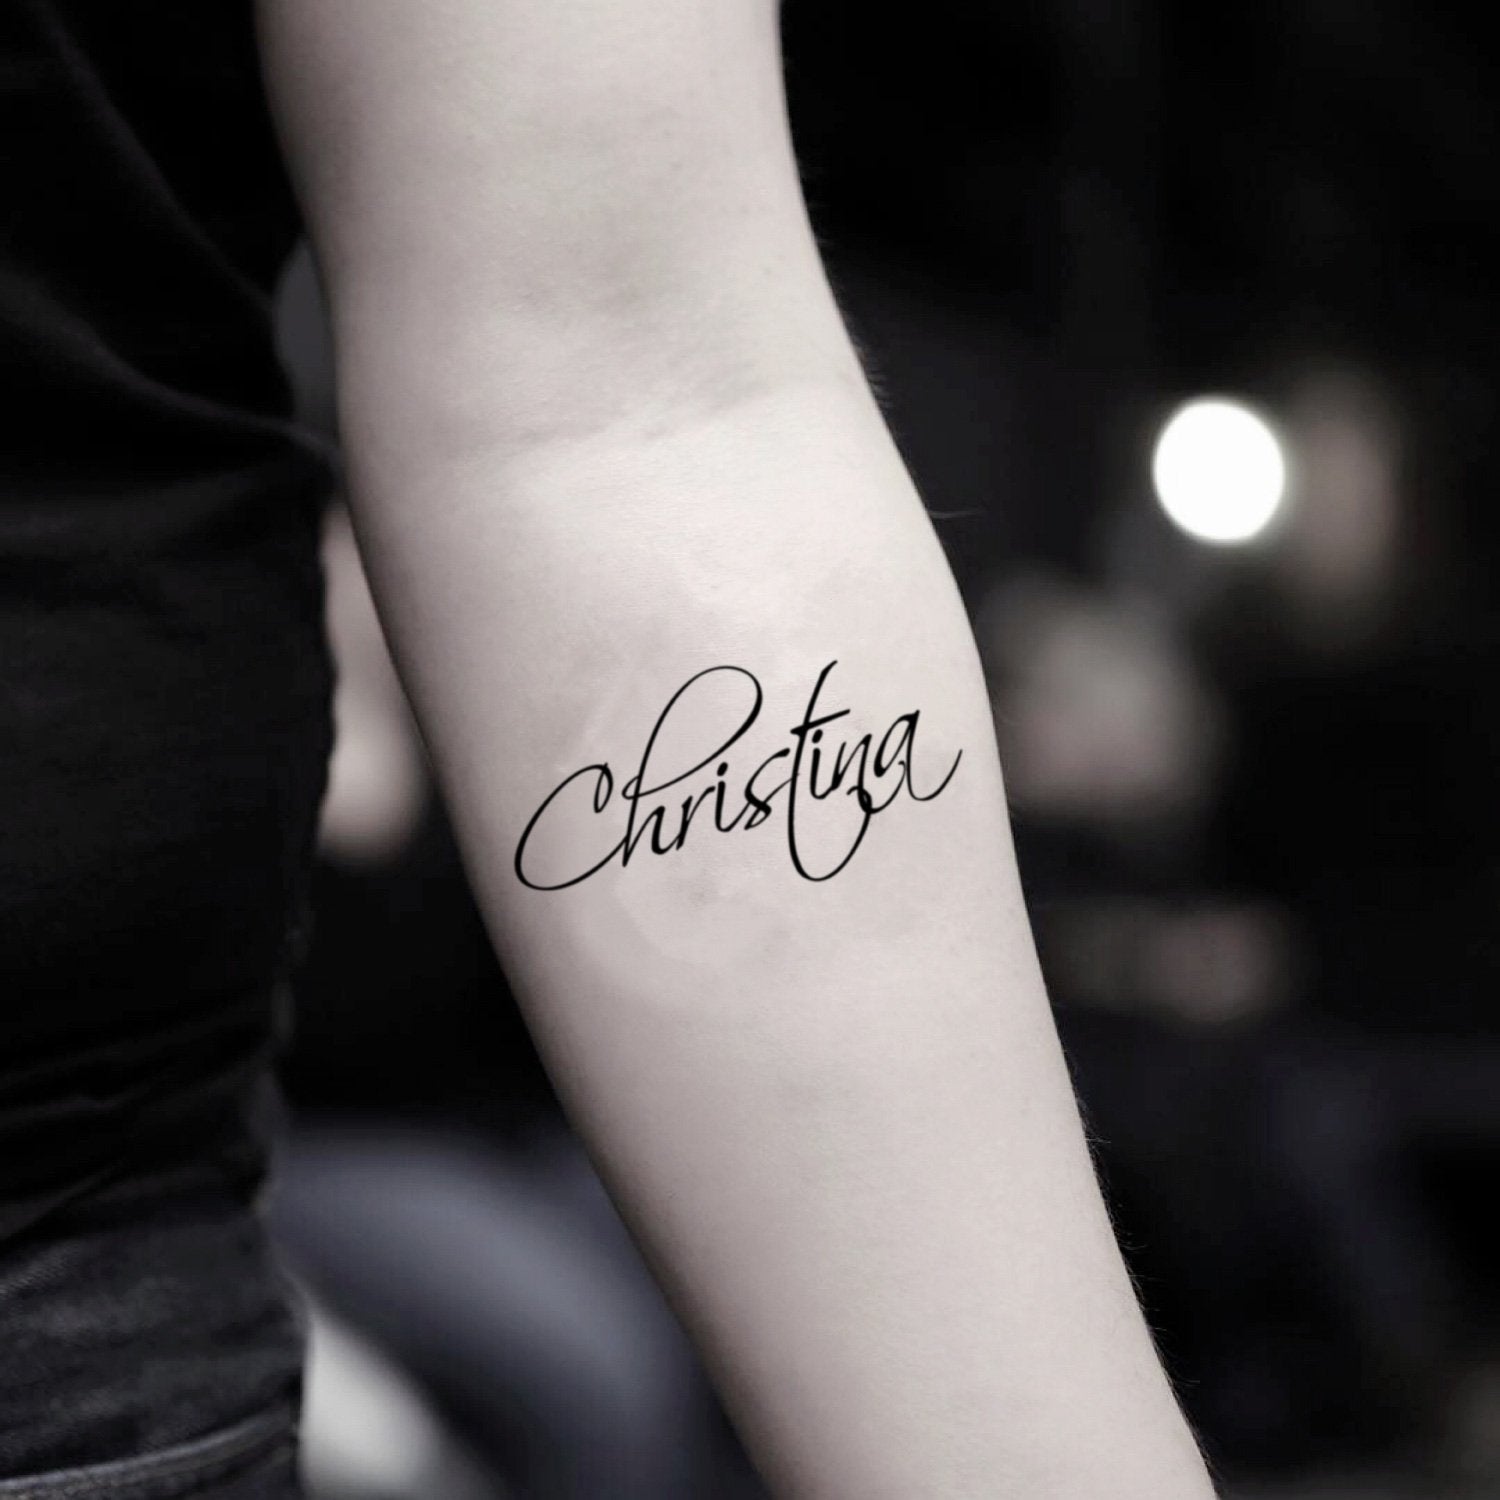 christina name tattoo designs